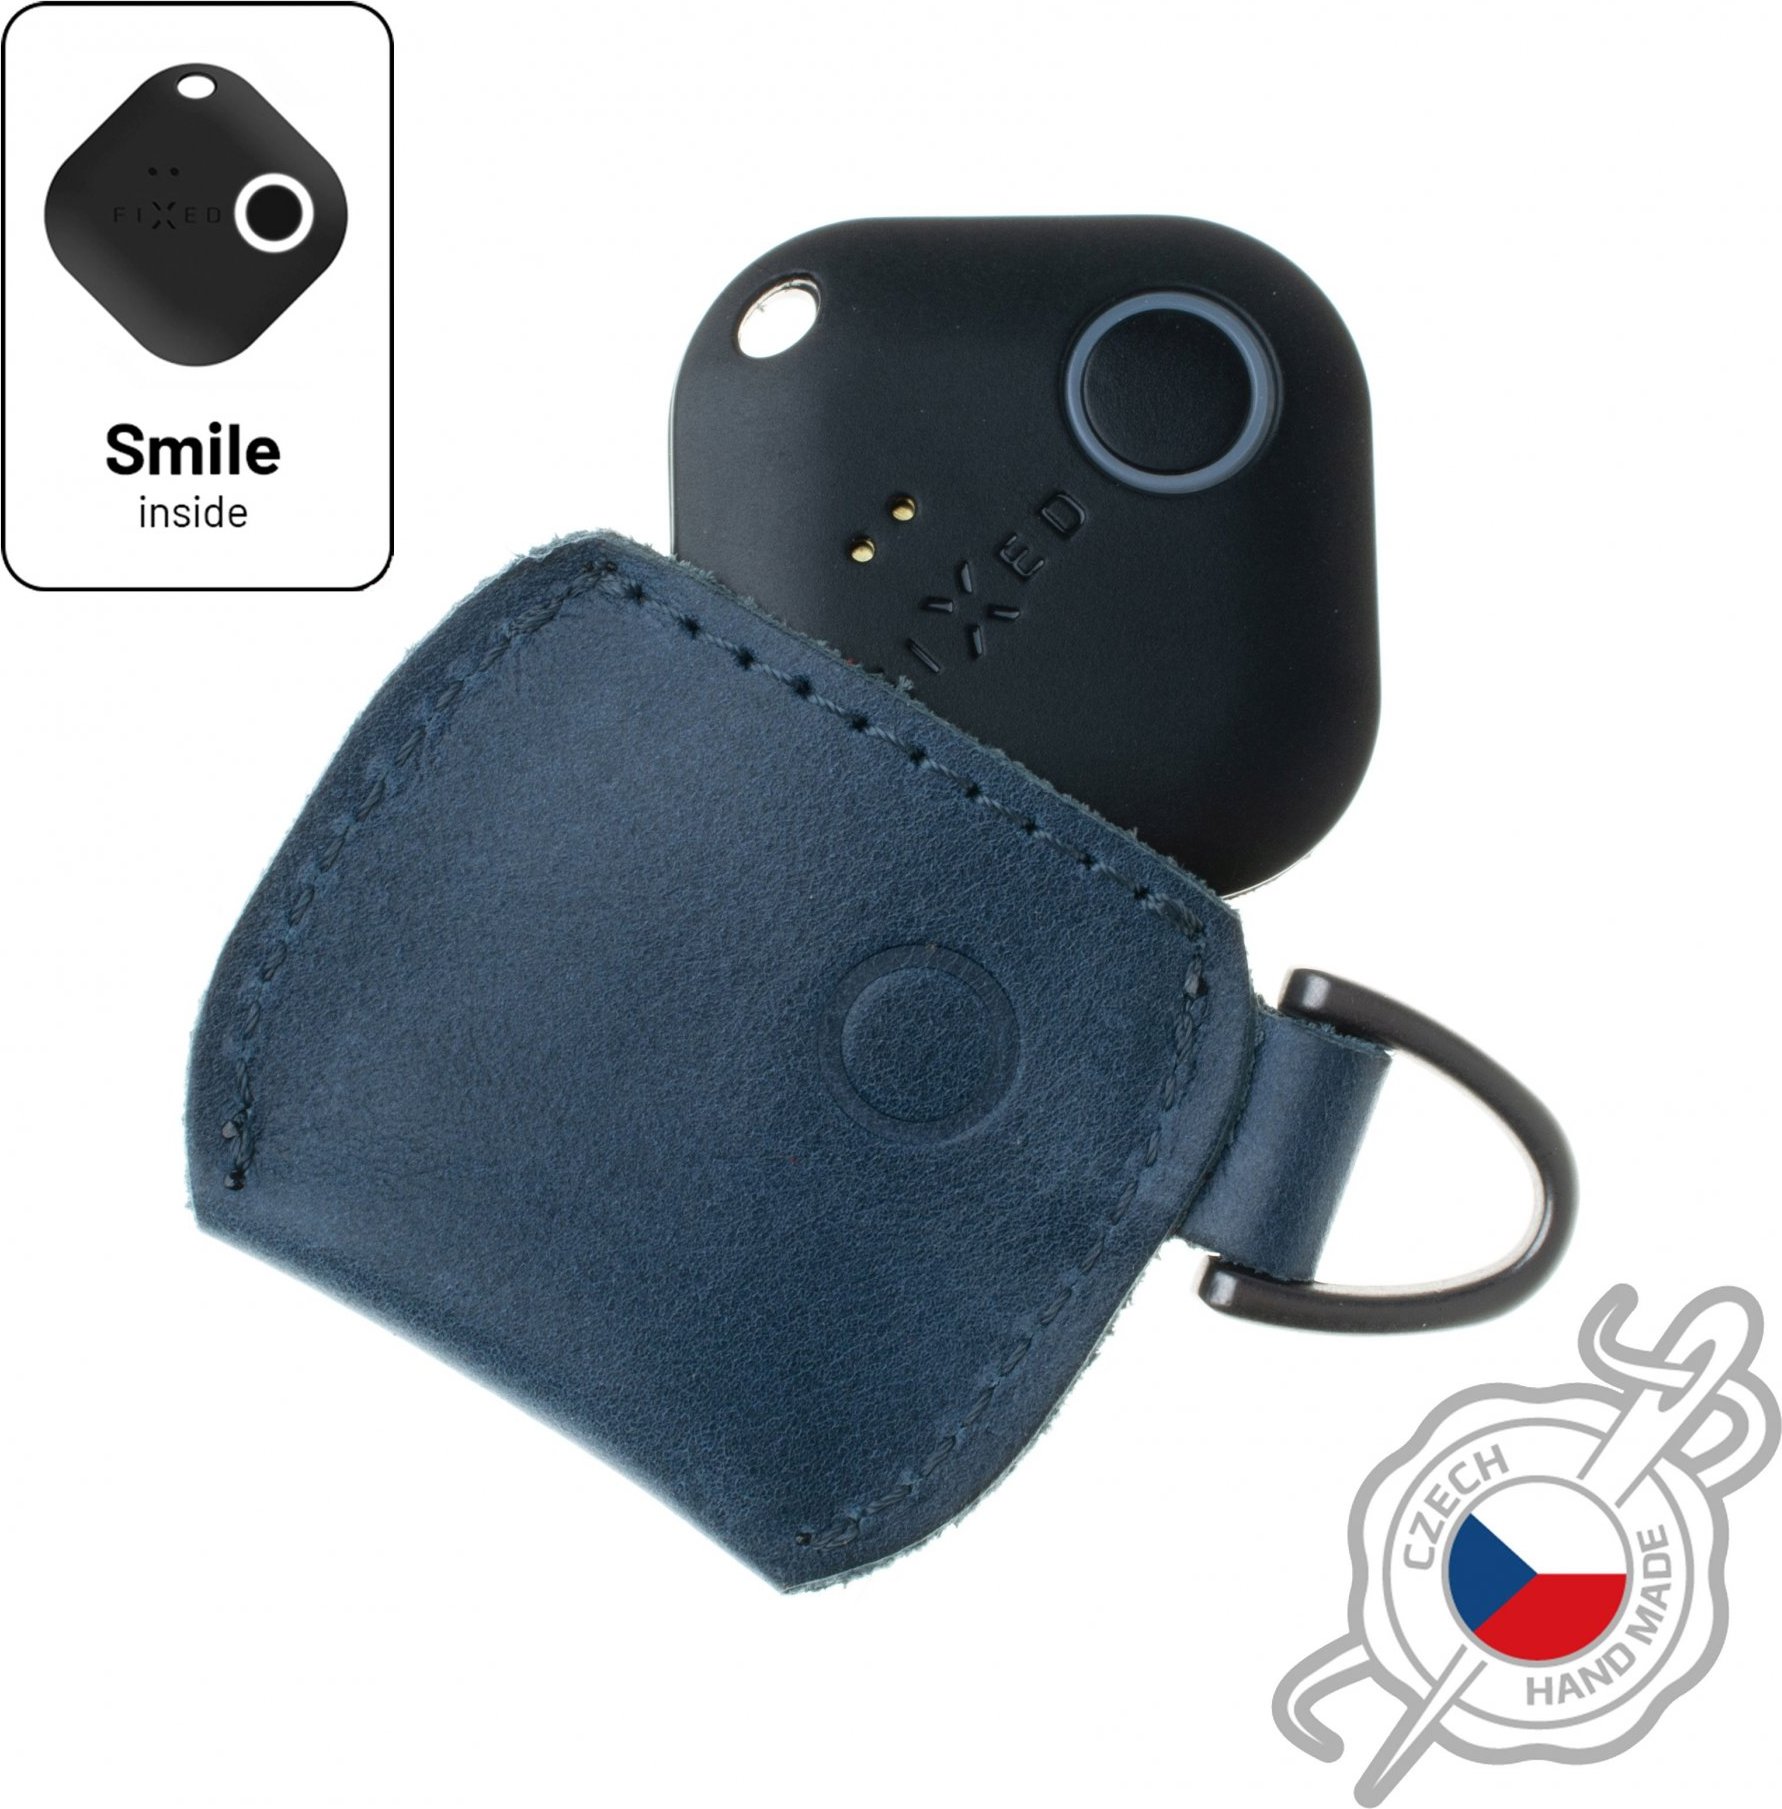 Kožené pouzdro FIXED Smile Case se smart trackerem FIXED Smile Pro, modré